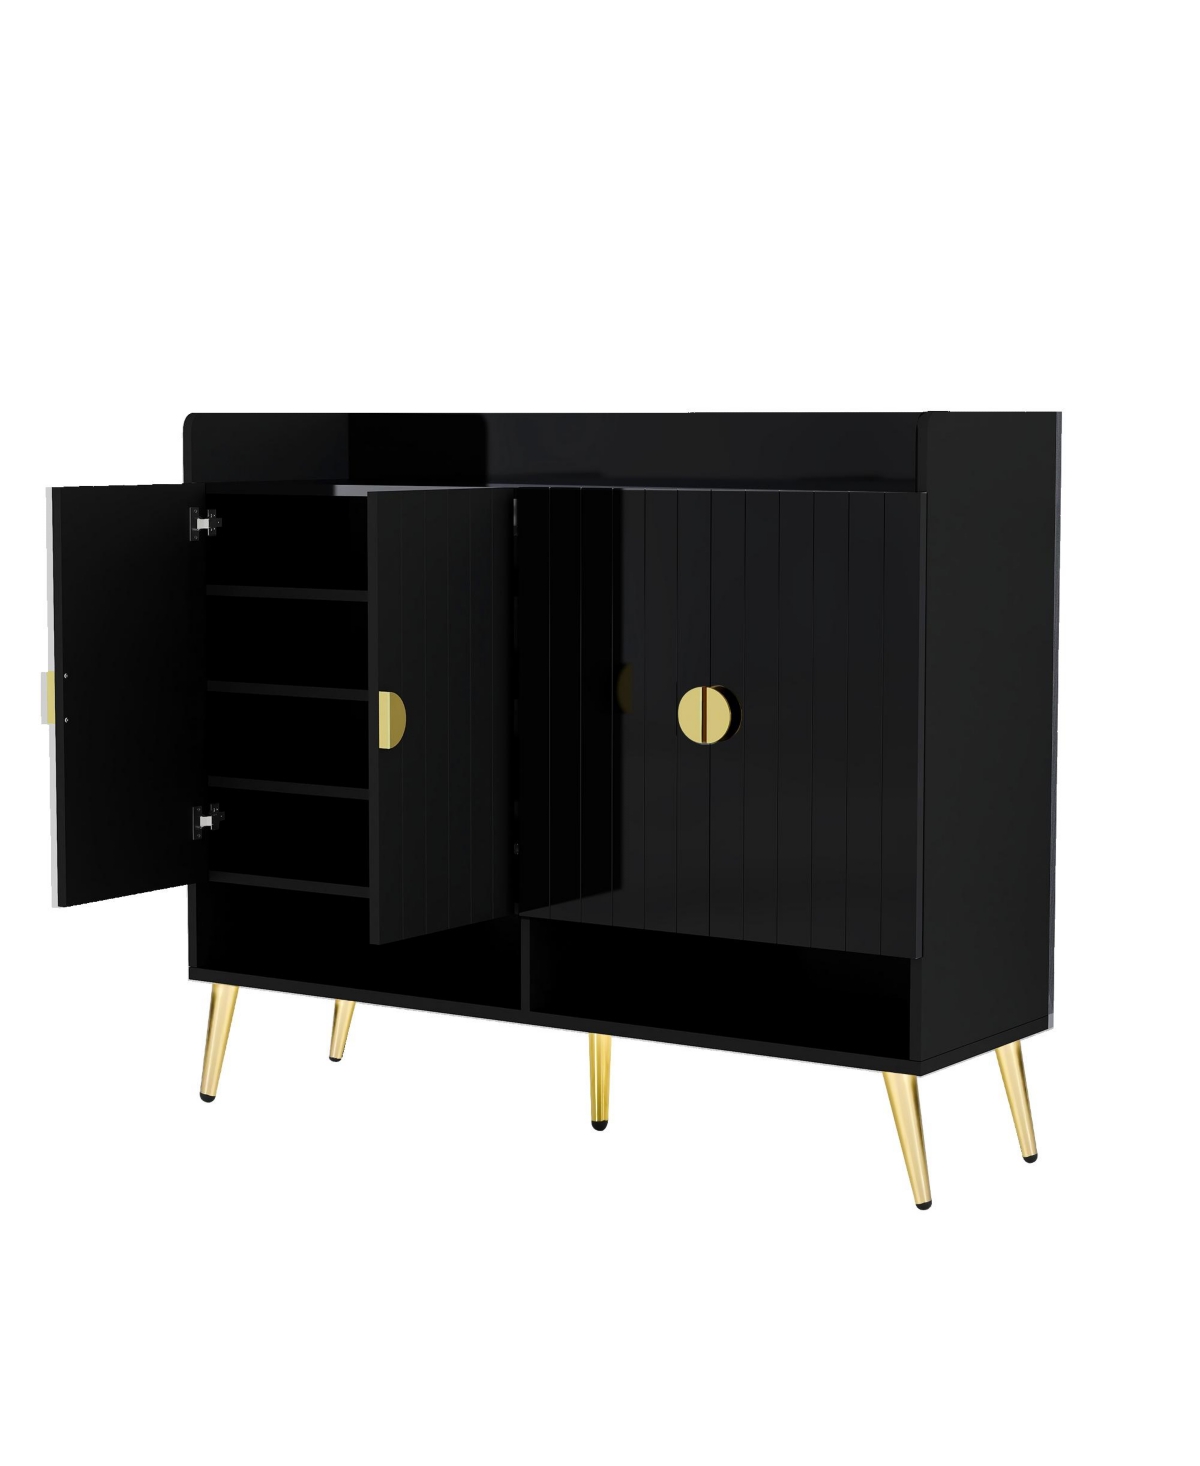 Shoe Cabinet With Doors, 11-Tier Shoe Storage Cabinet With Adjustable Shelves - Black